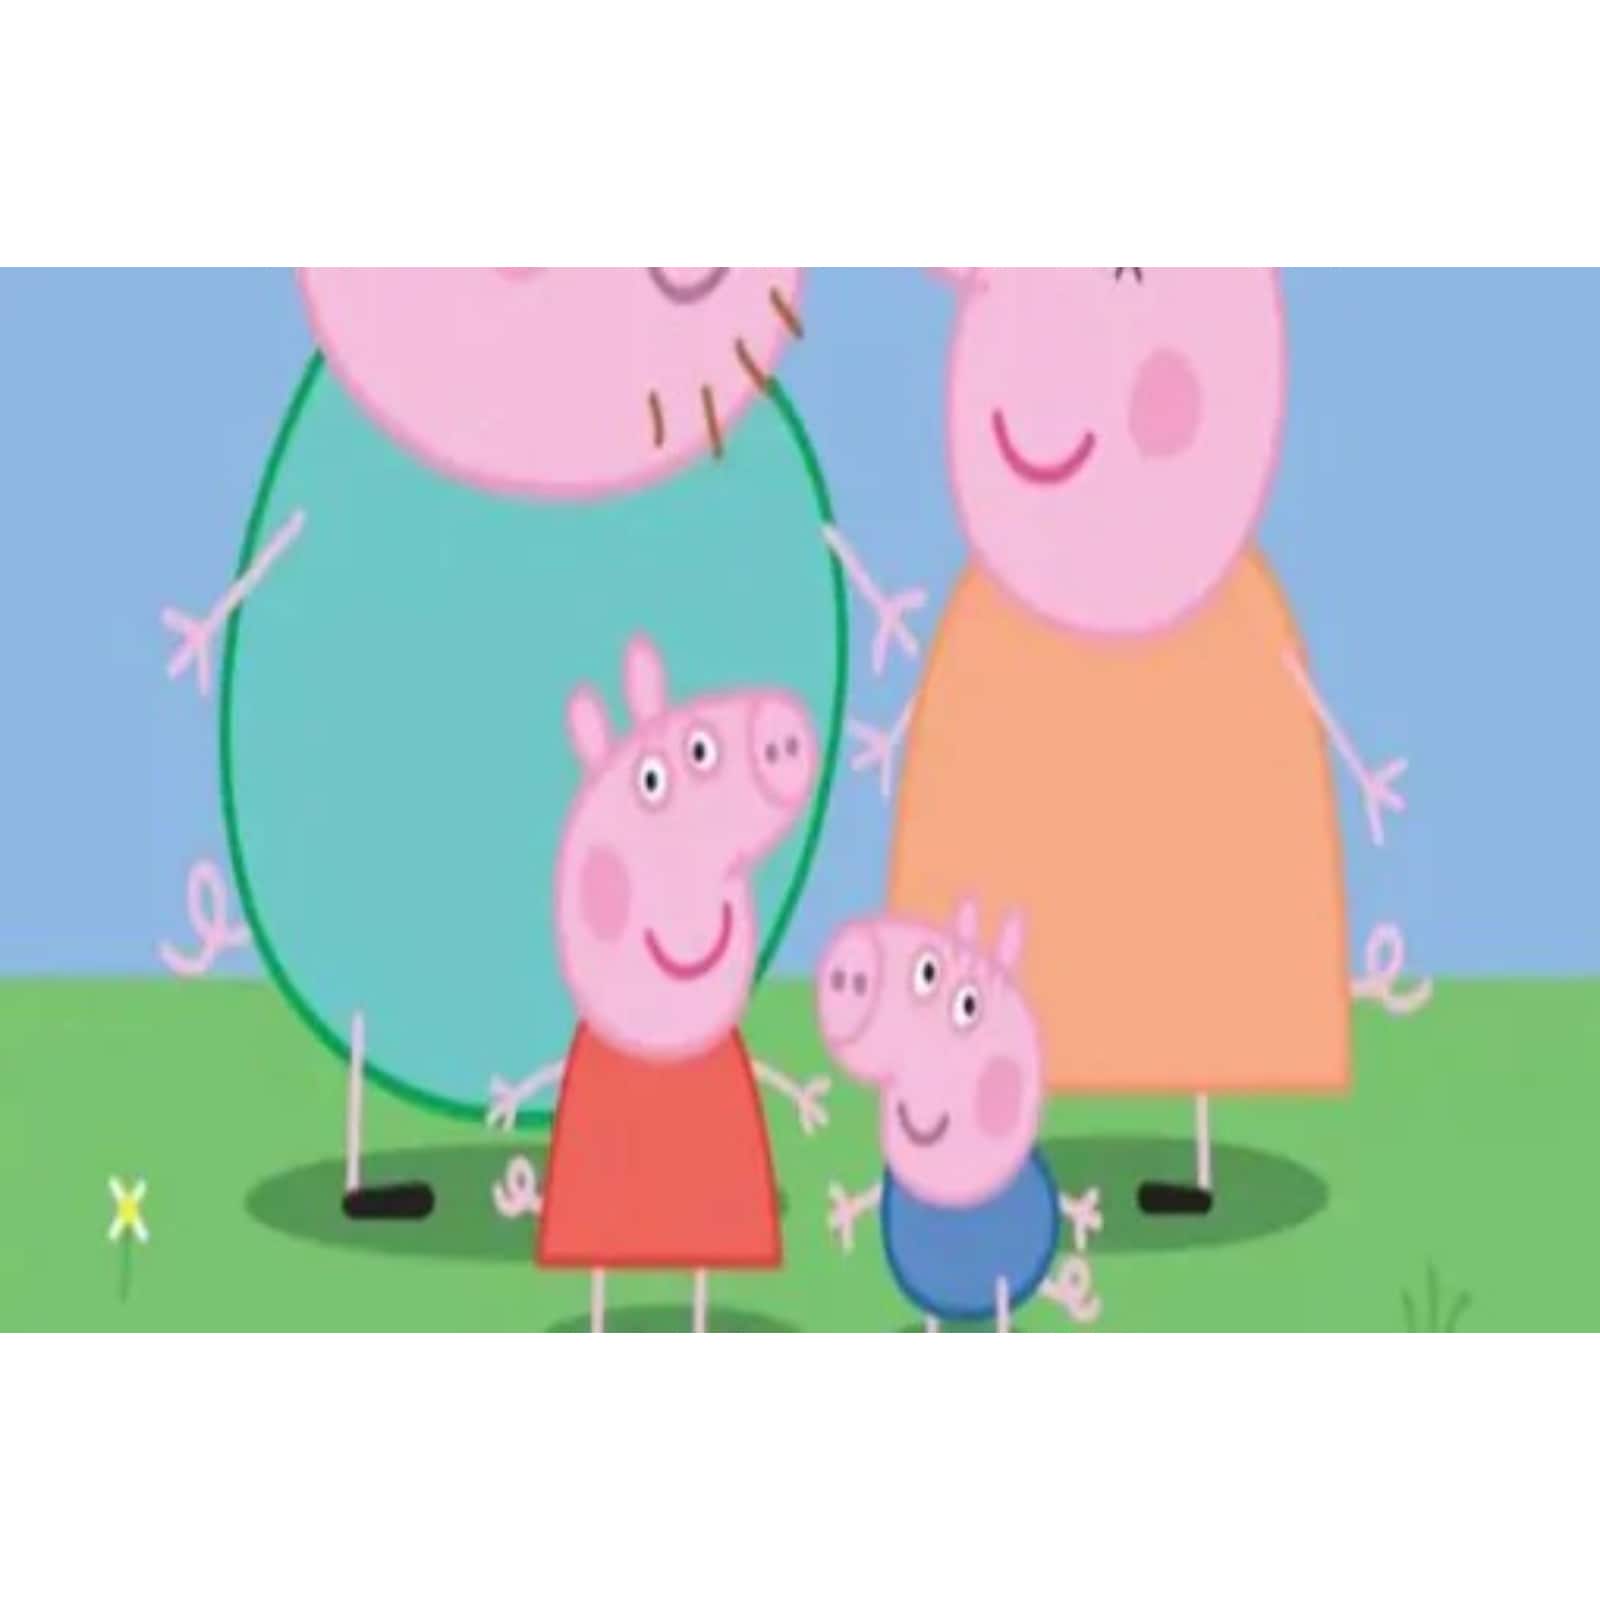 Cartoons Like Peppa Pig May be Encouraging Bad Behavior Among Kids: Expert